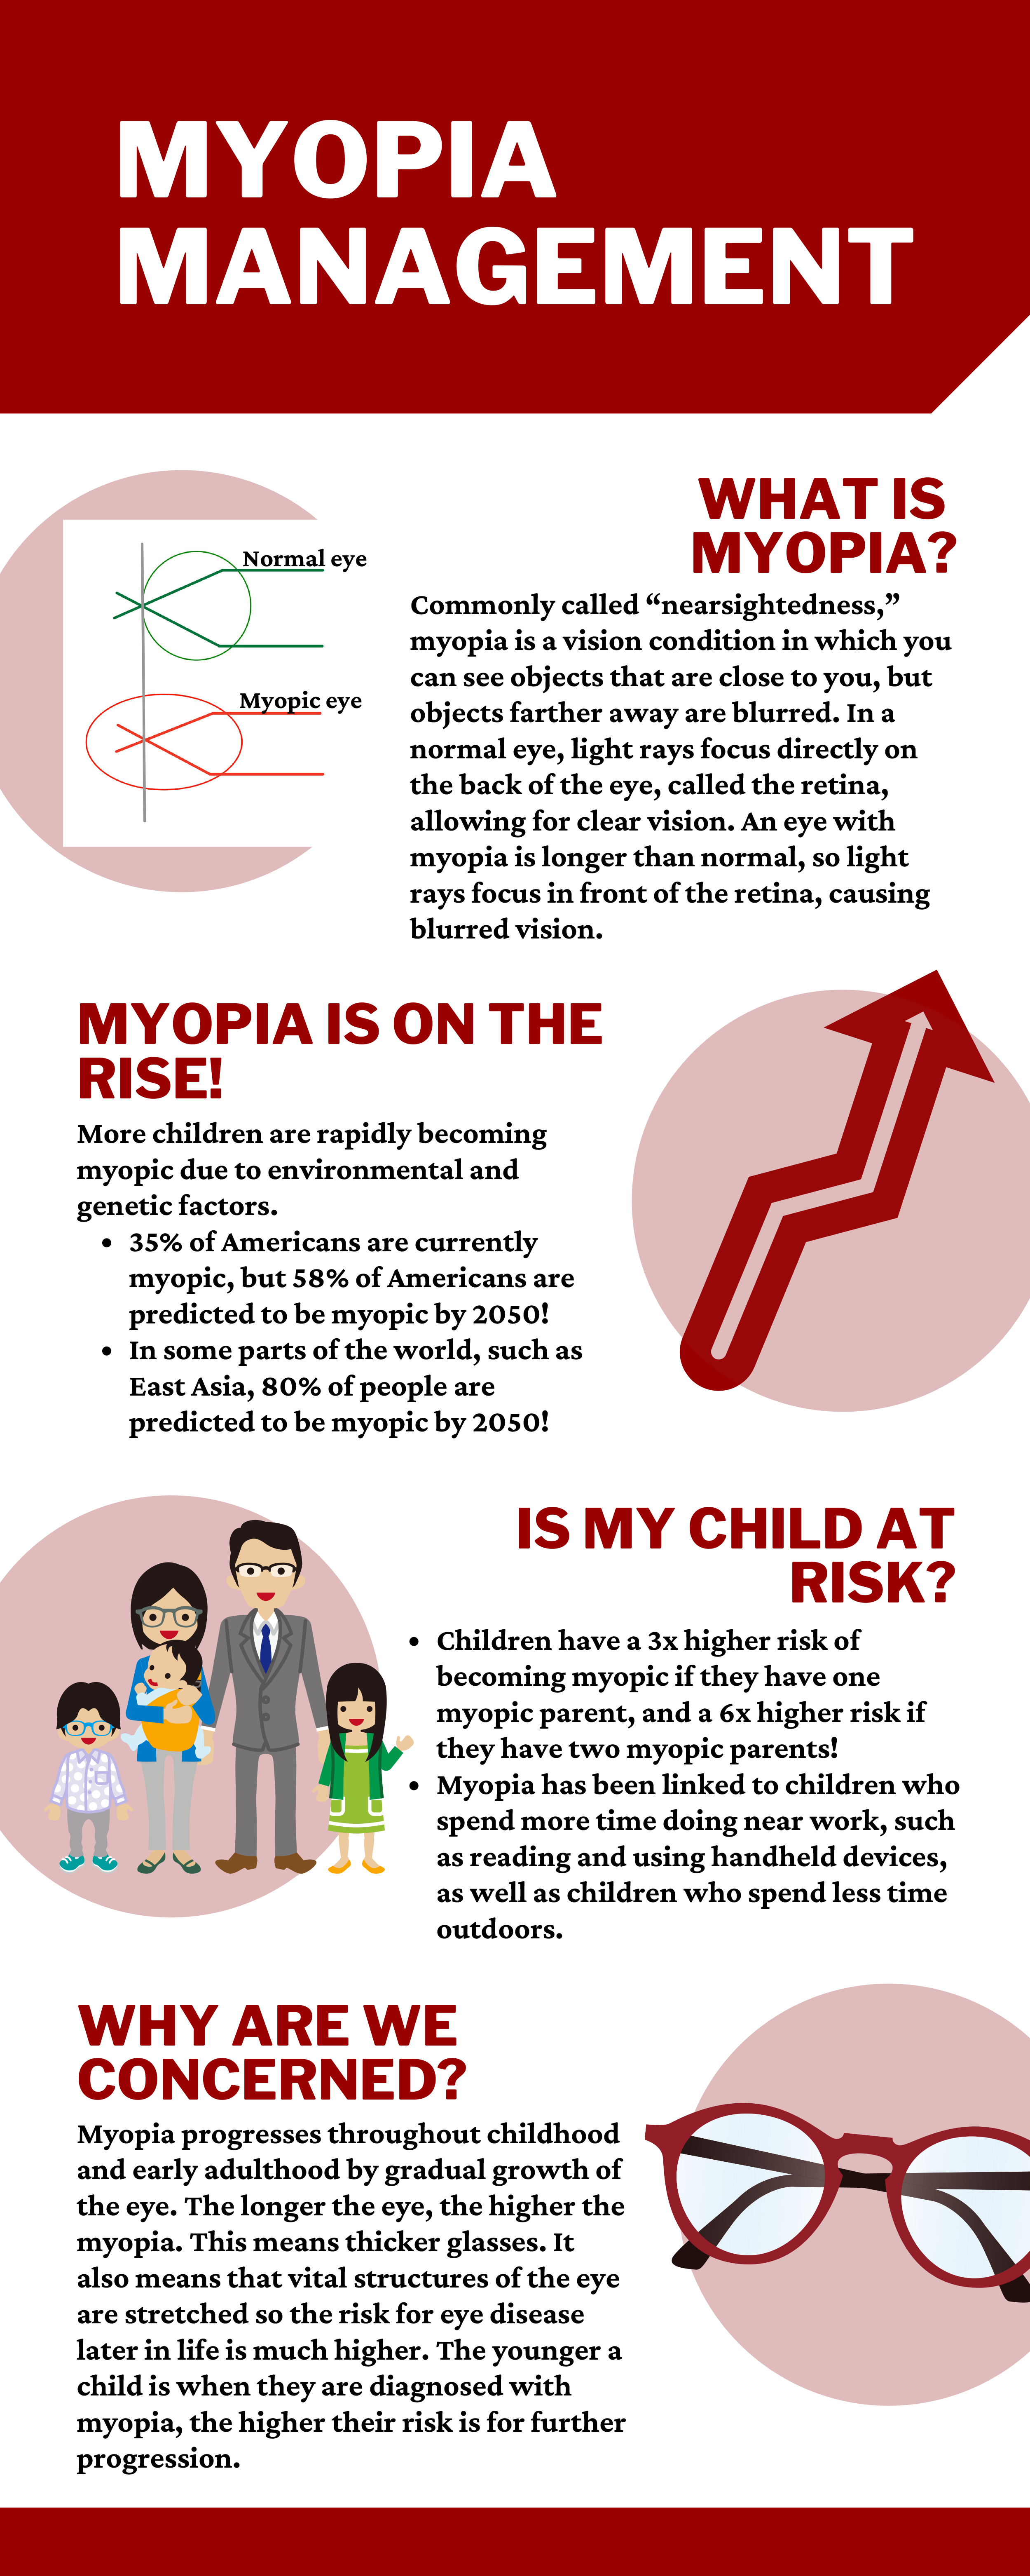 Myopia Management Resources